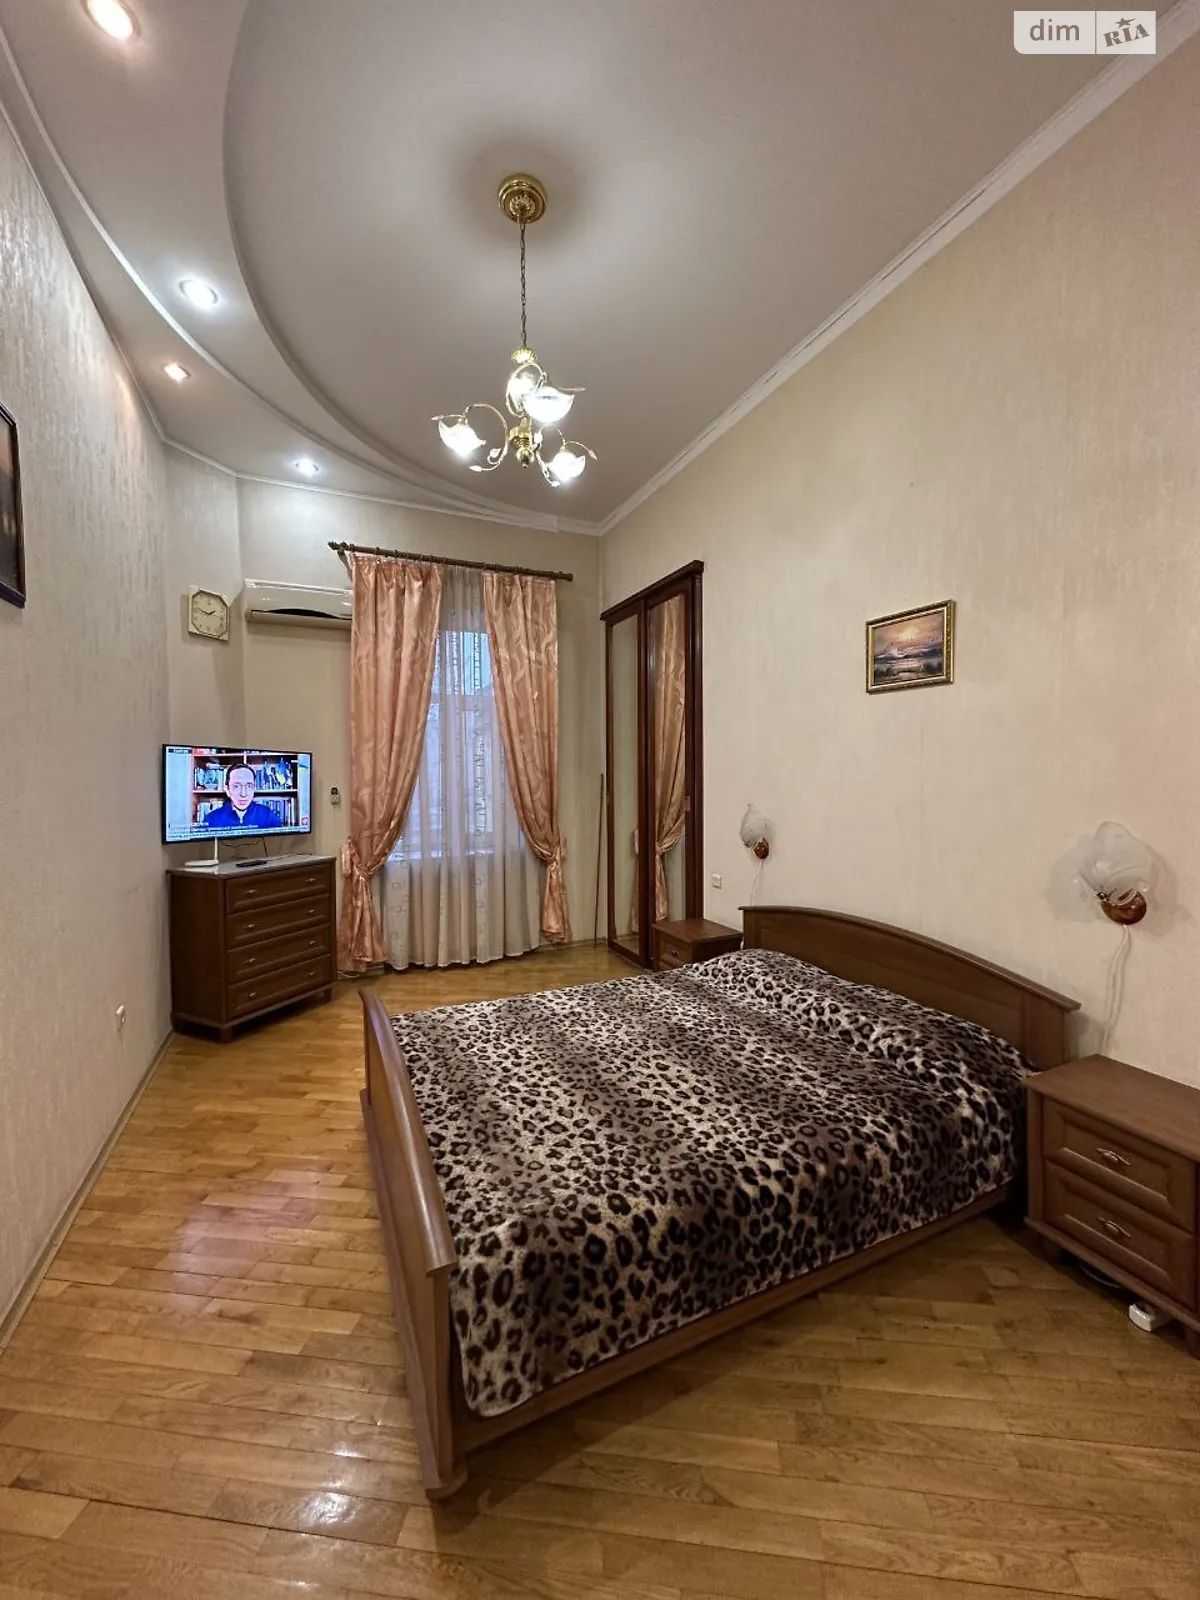 Сдается в аренду 3-комнатная квартира 115 кв. м в Одессе, ул. Бунина - фото 1